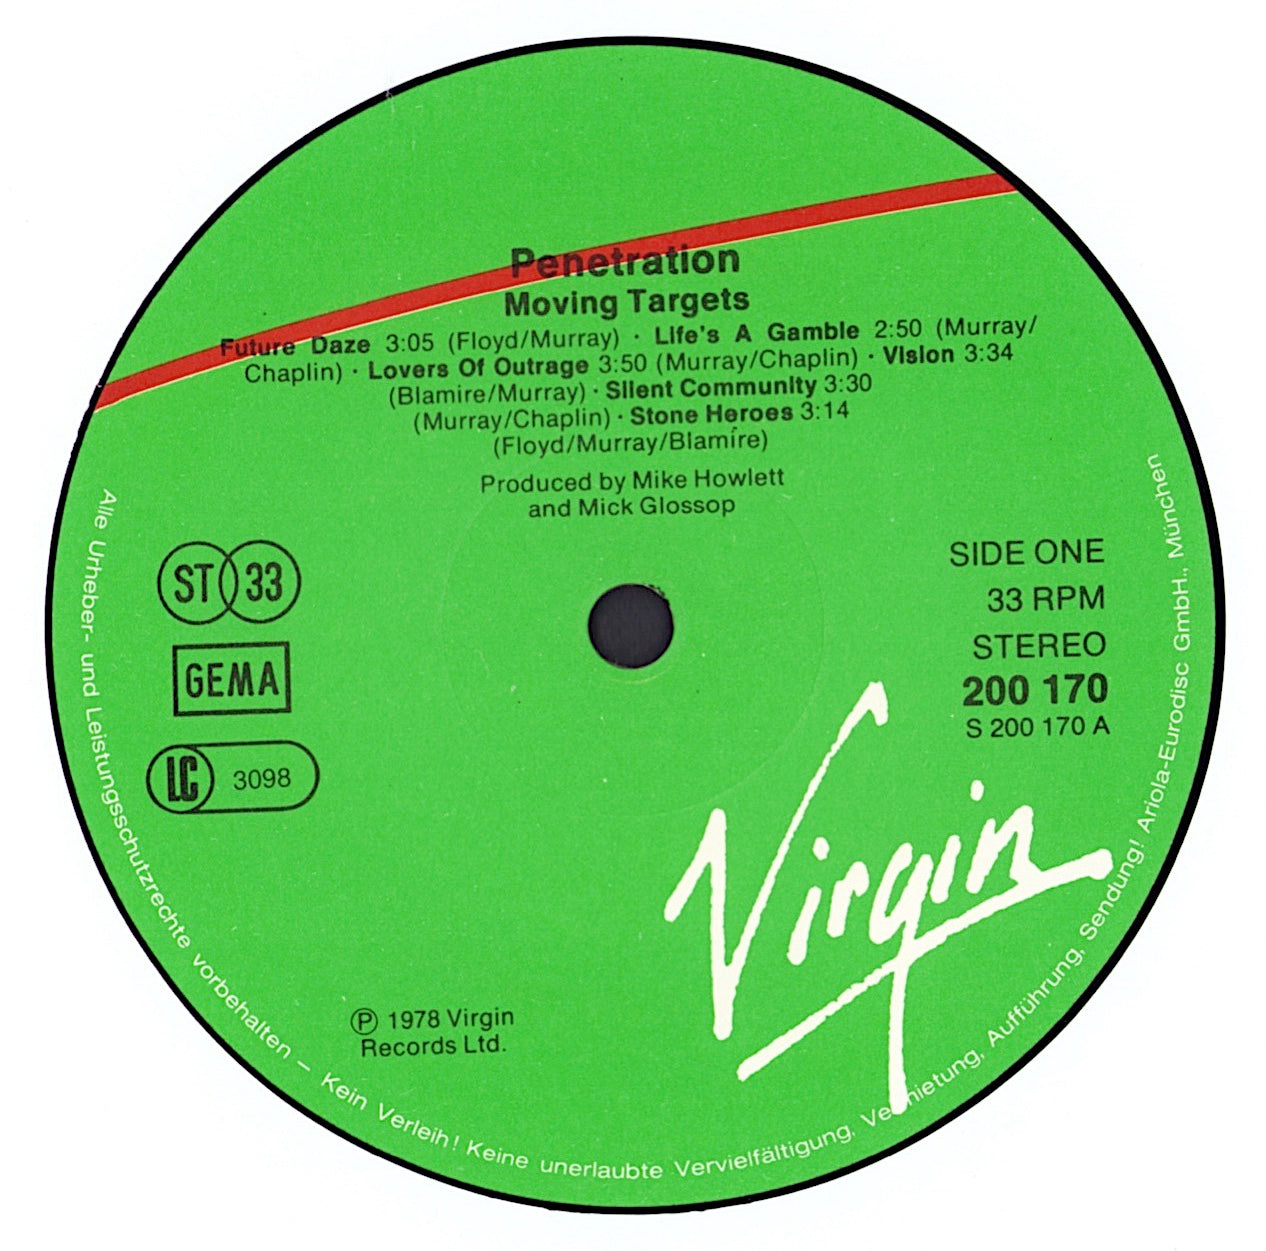 Penetration - Moving Targets Vinyl LP